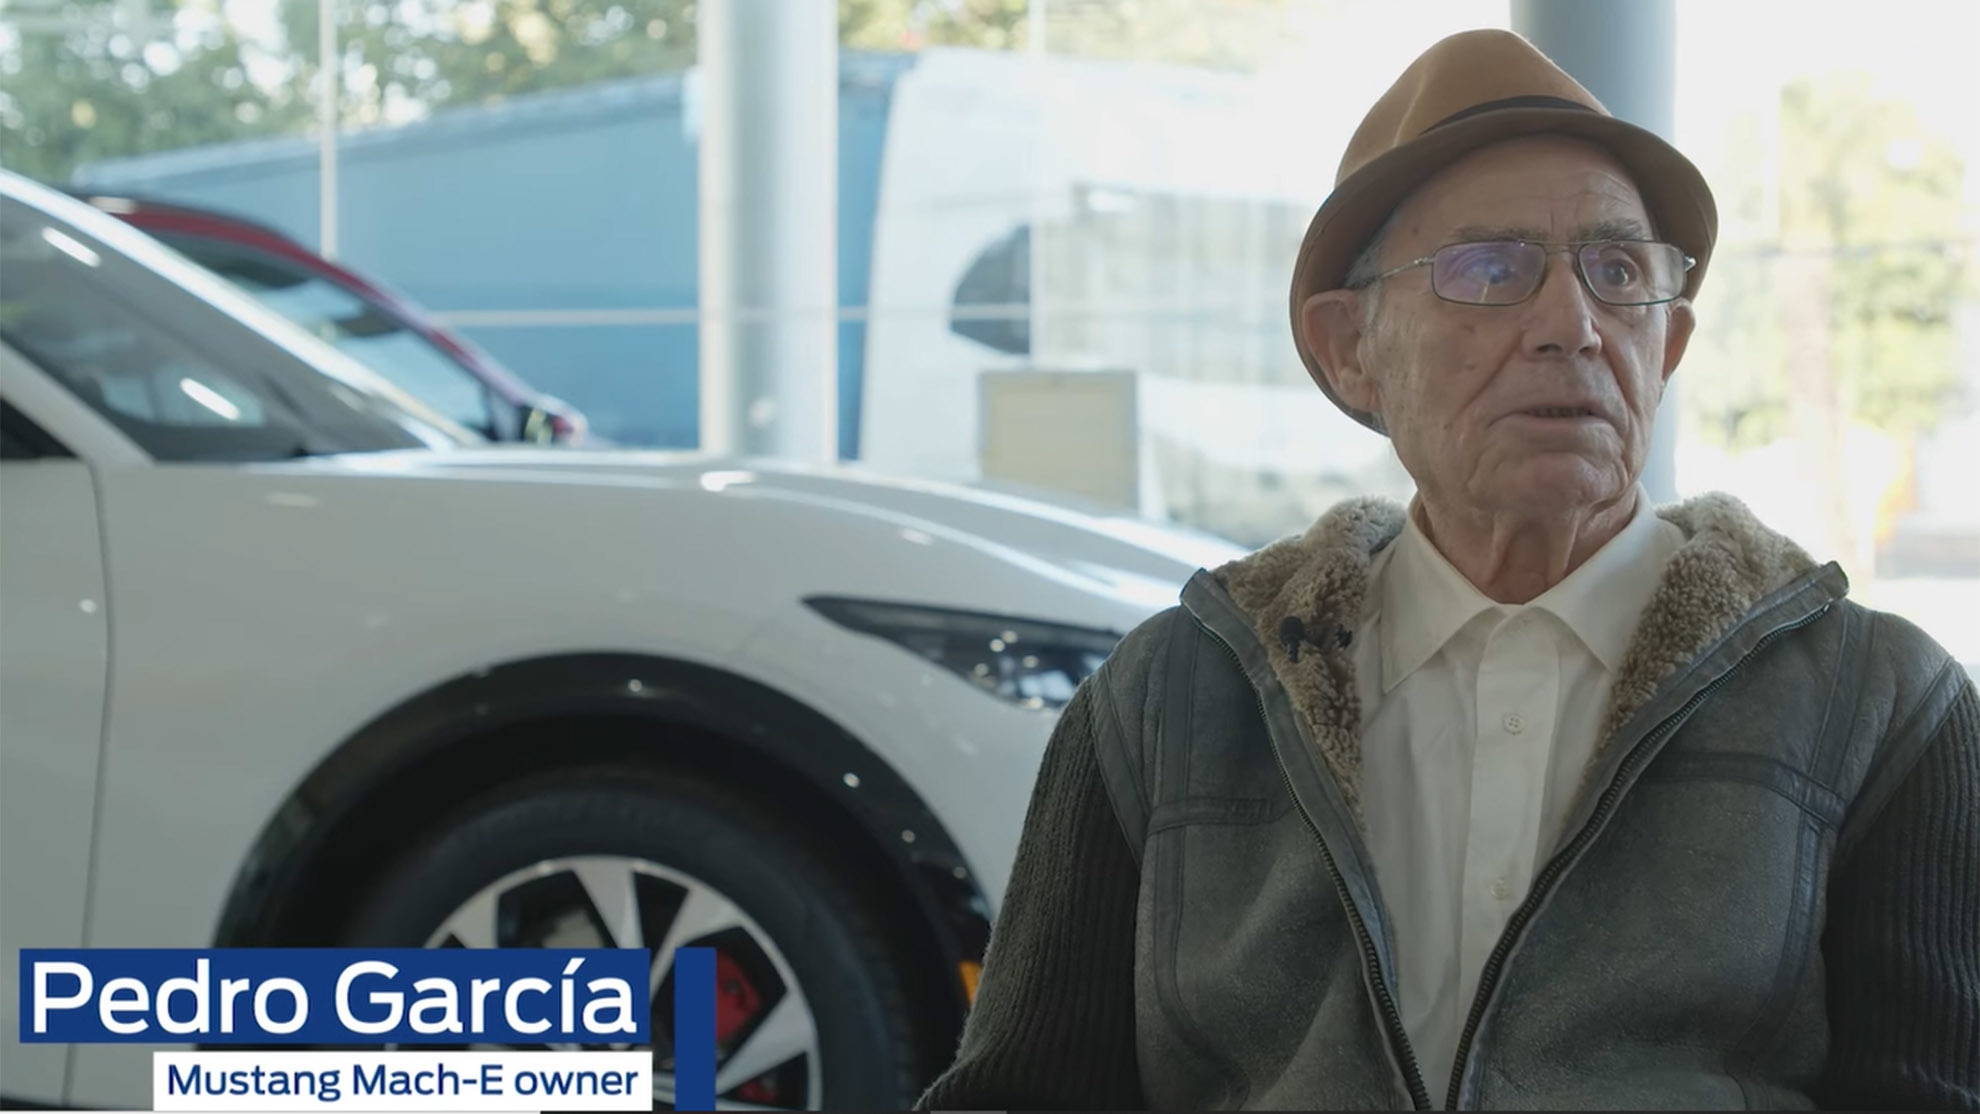 Pedro Garcia - Jim Farley - Ford Mustang Mach-e - CEO de Ford - Twitter - coche electrico